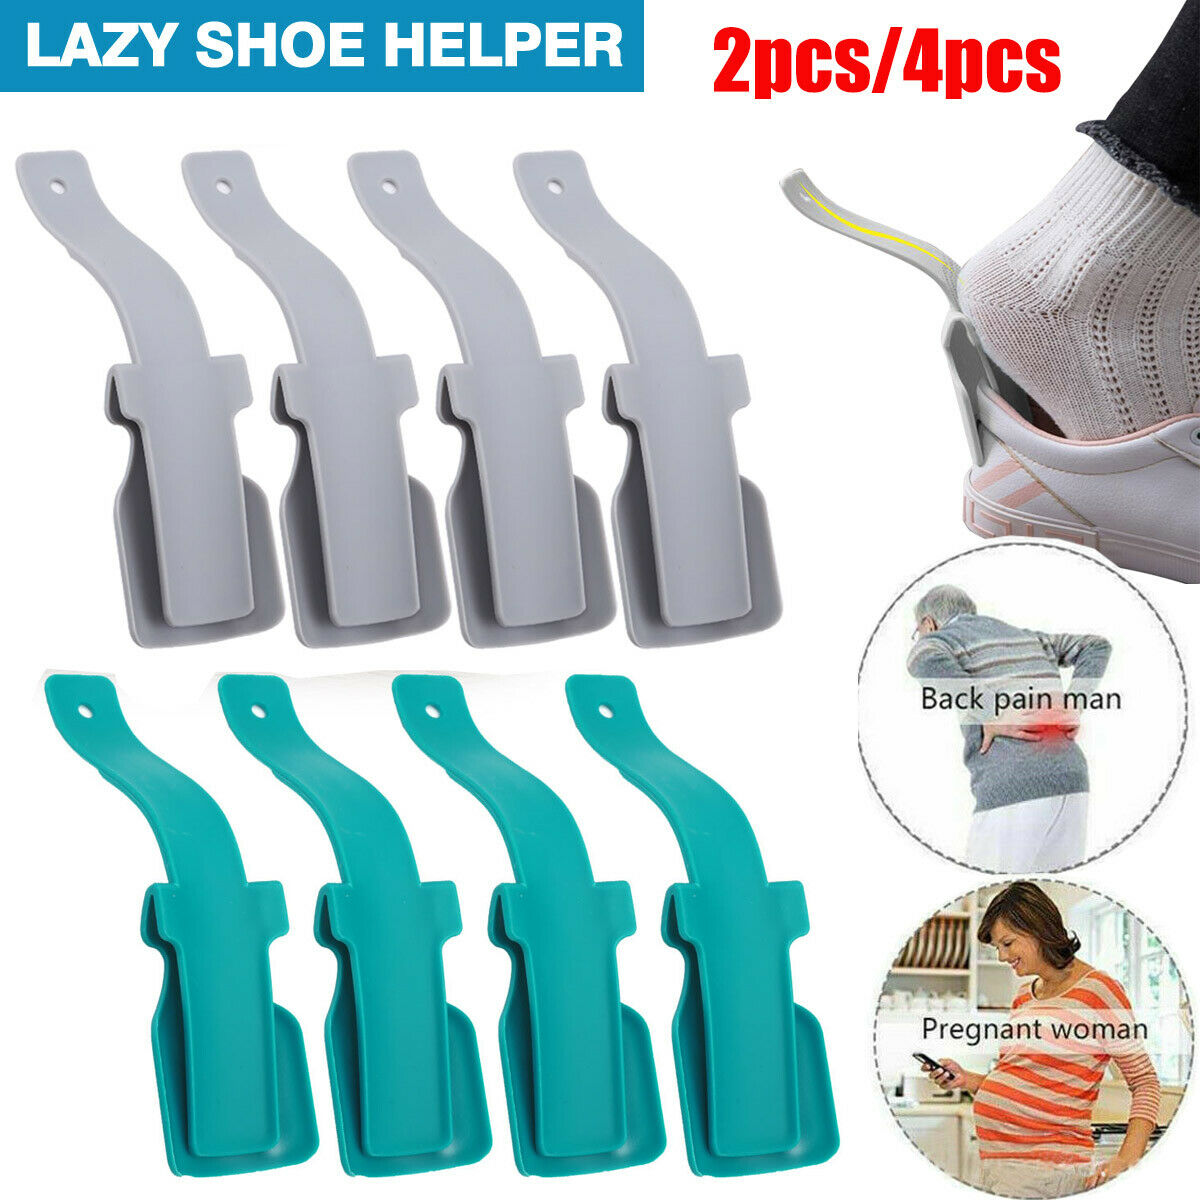 2/4 Pcs Unisex Lazy Shoe Helper Handled Shoe Horn Easy On & Off Lifting Helper